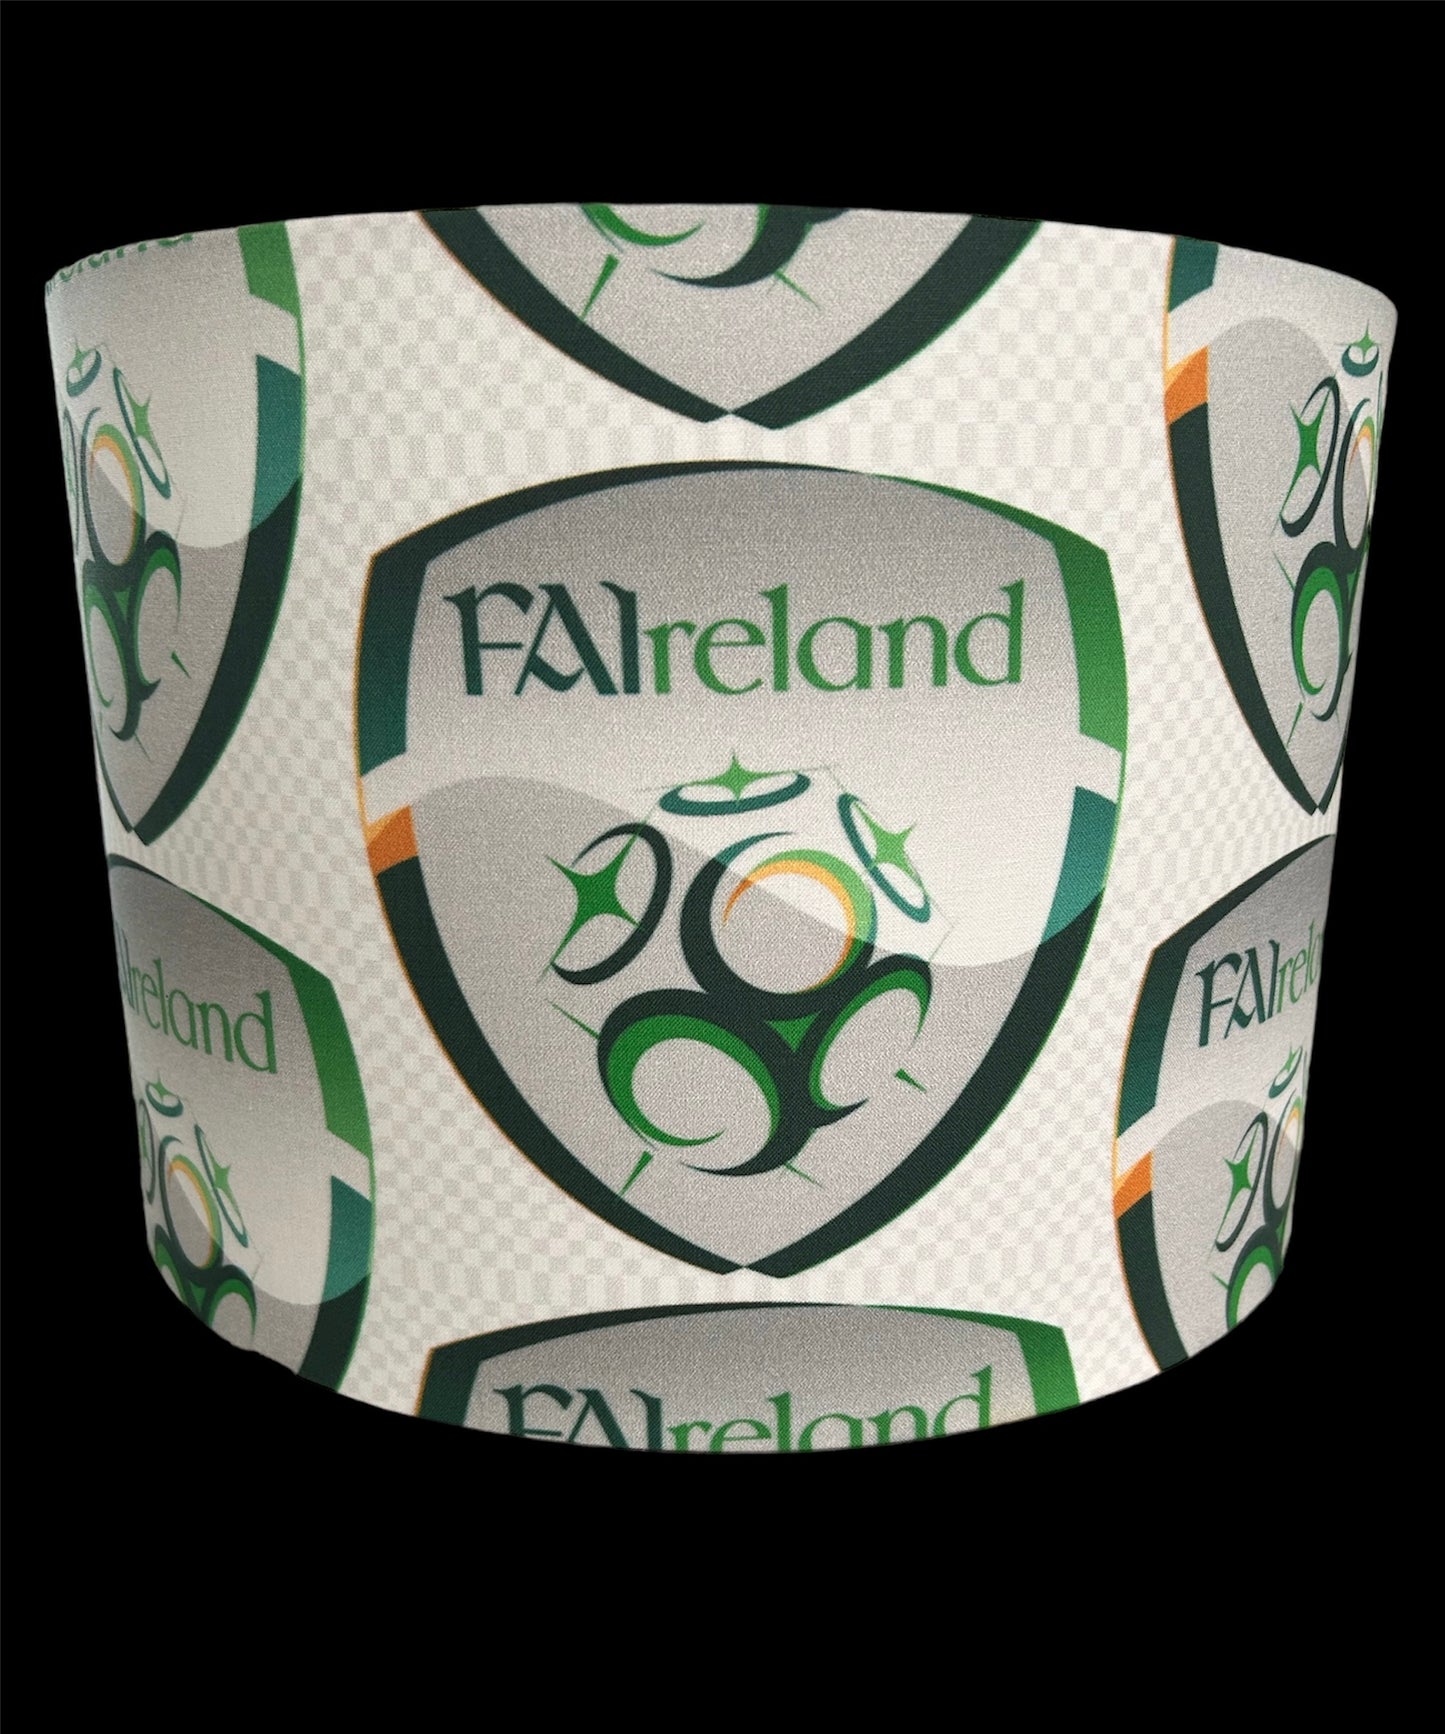 Handmade Drum Fabric Lampshade - Scotland Football/Soccer - Zsazsa Design